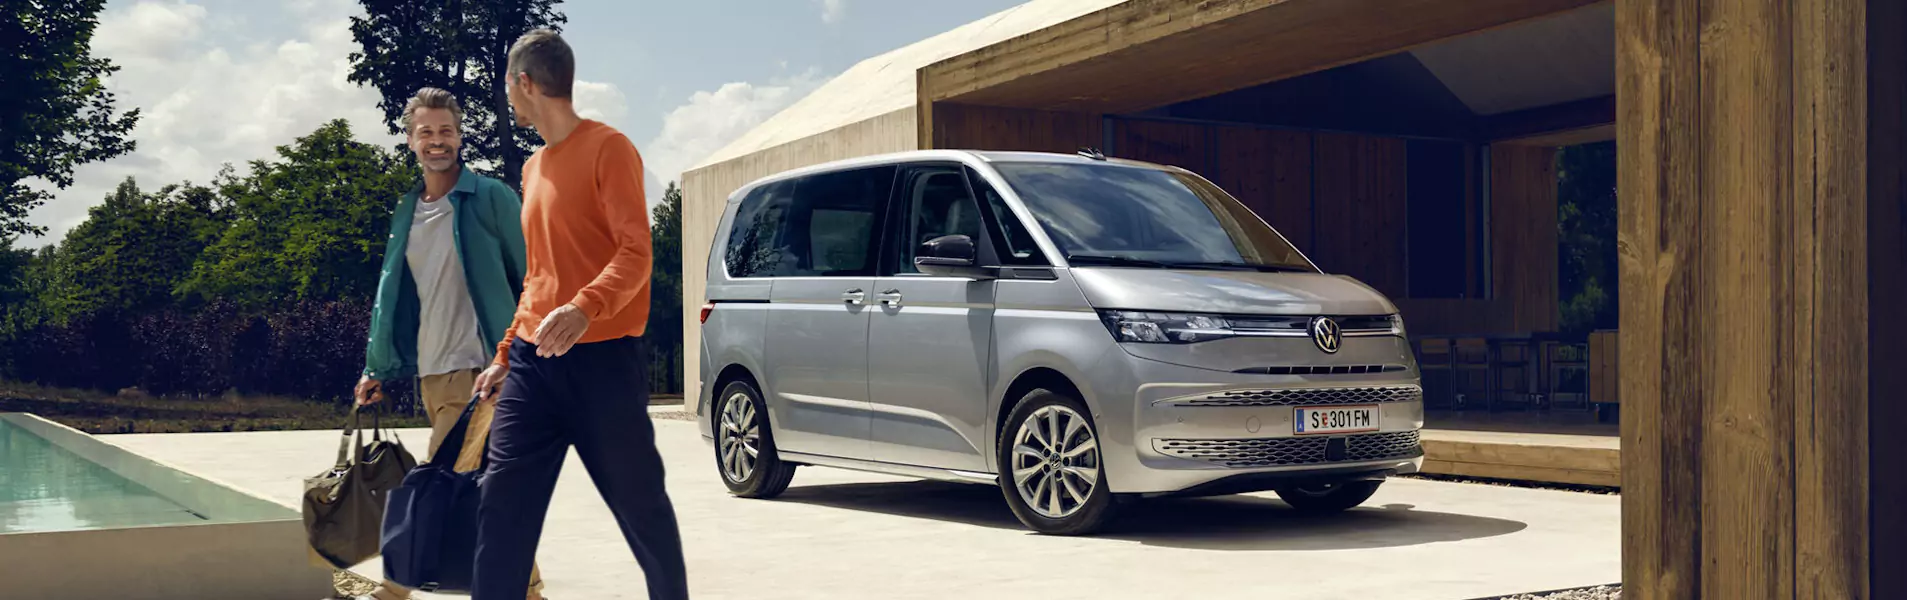 Volkswagen Multivan: carrinha de transporte de passageiros de 7 lugares